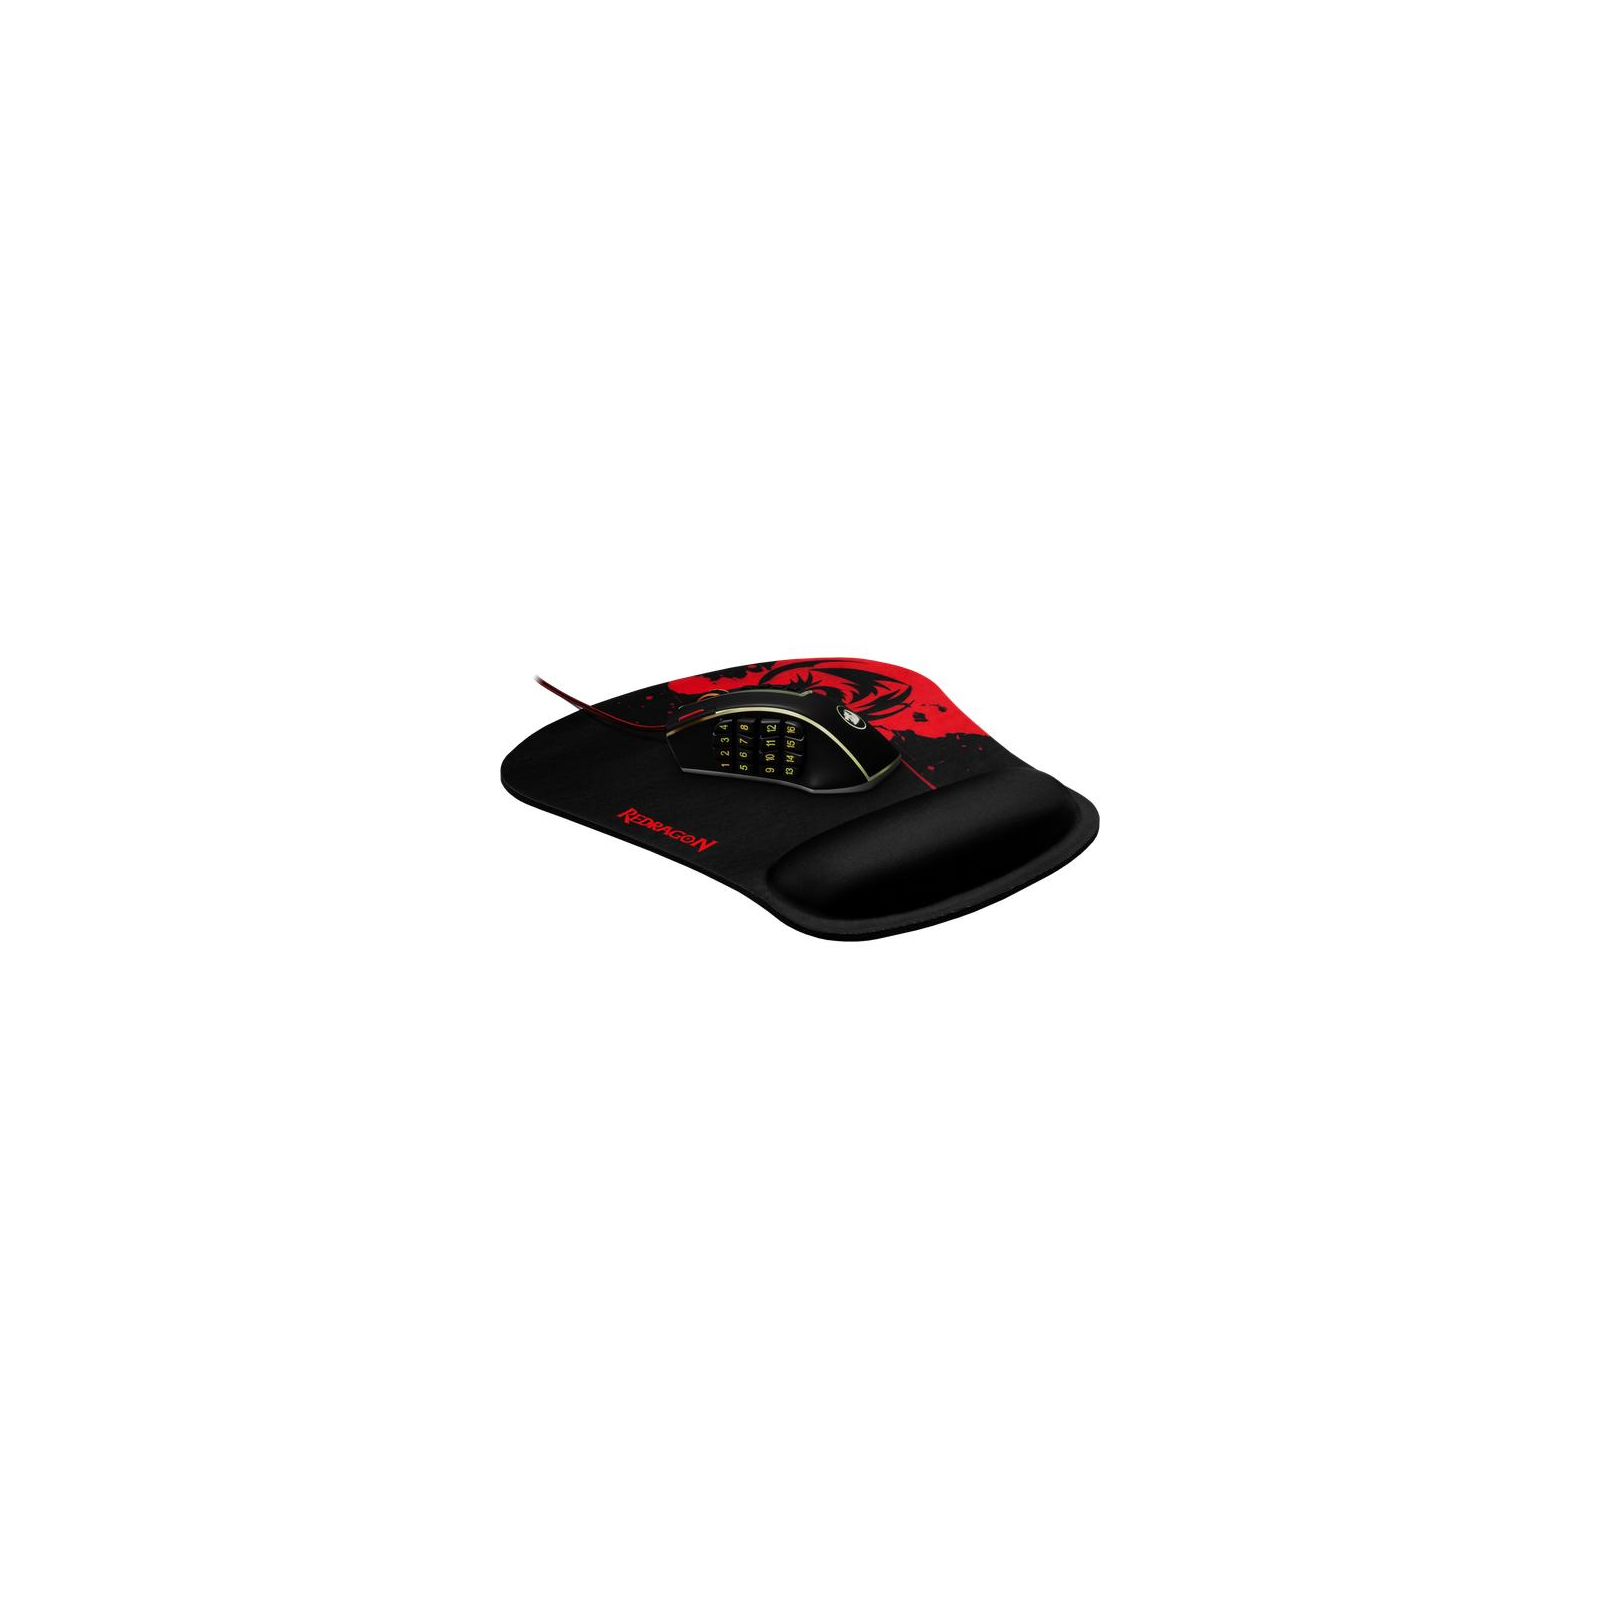 Коврик для мышки Redragon Libra Speed Black-Red (78305) изображение 4